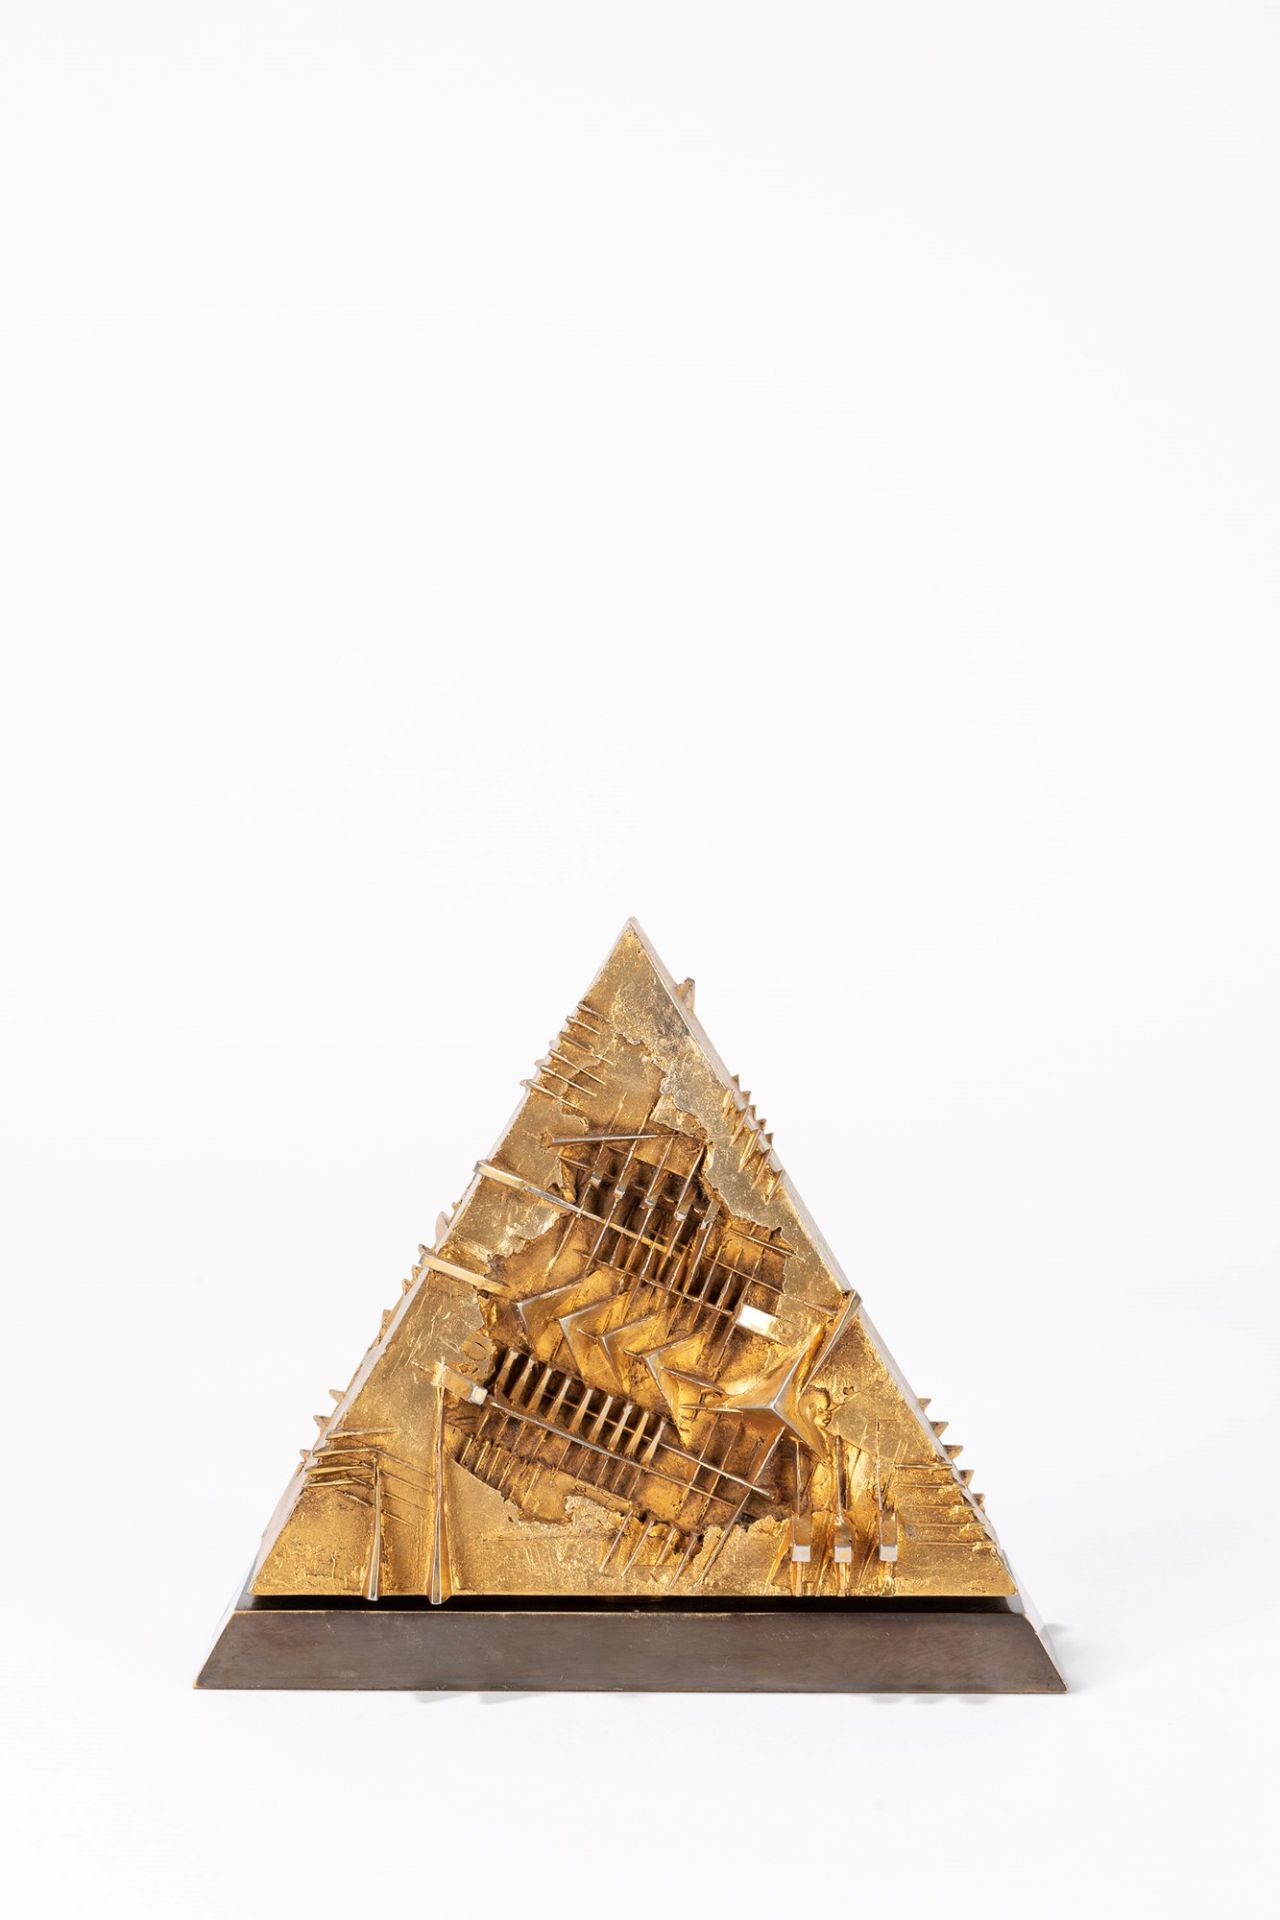 Arnaldo Pomodoro (Morciano di Romagna 1926) - Forma piramidale "Premio Marian Skubin", 1983-84